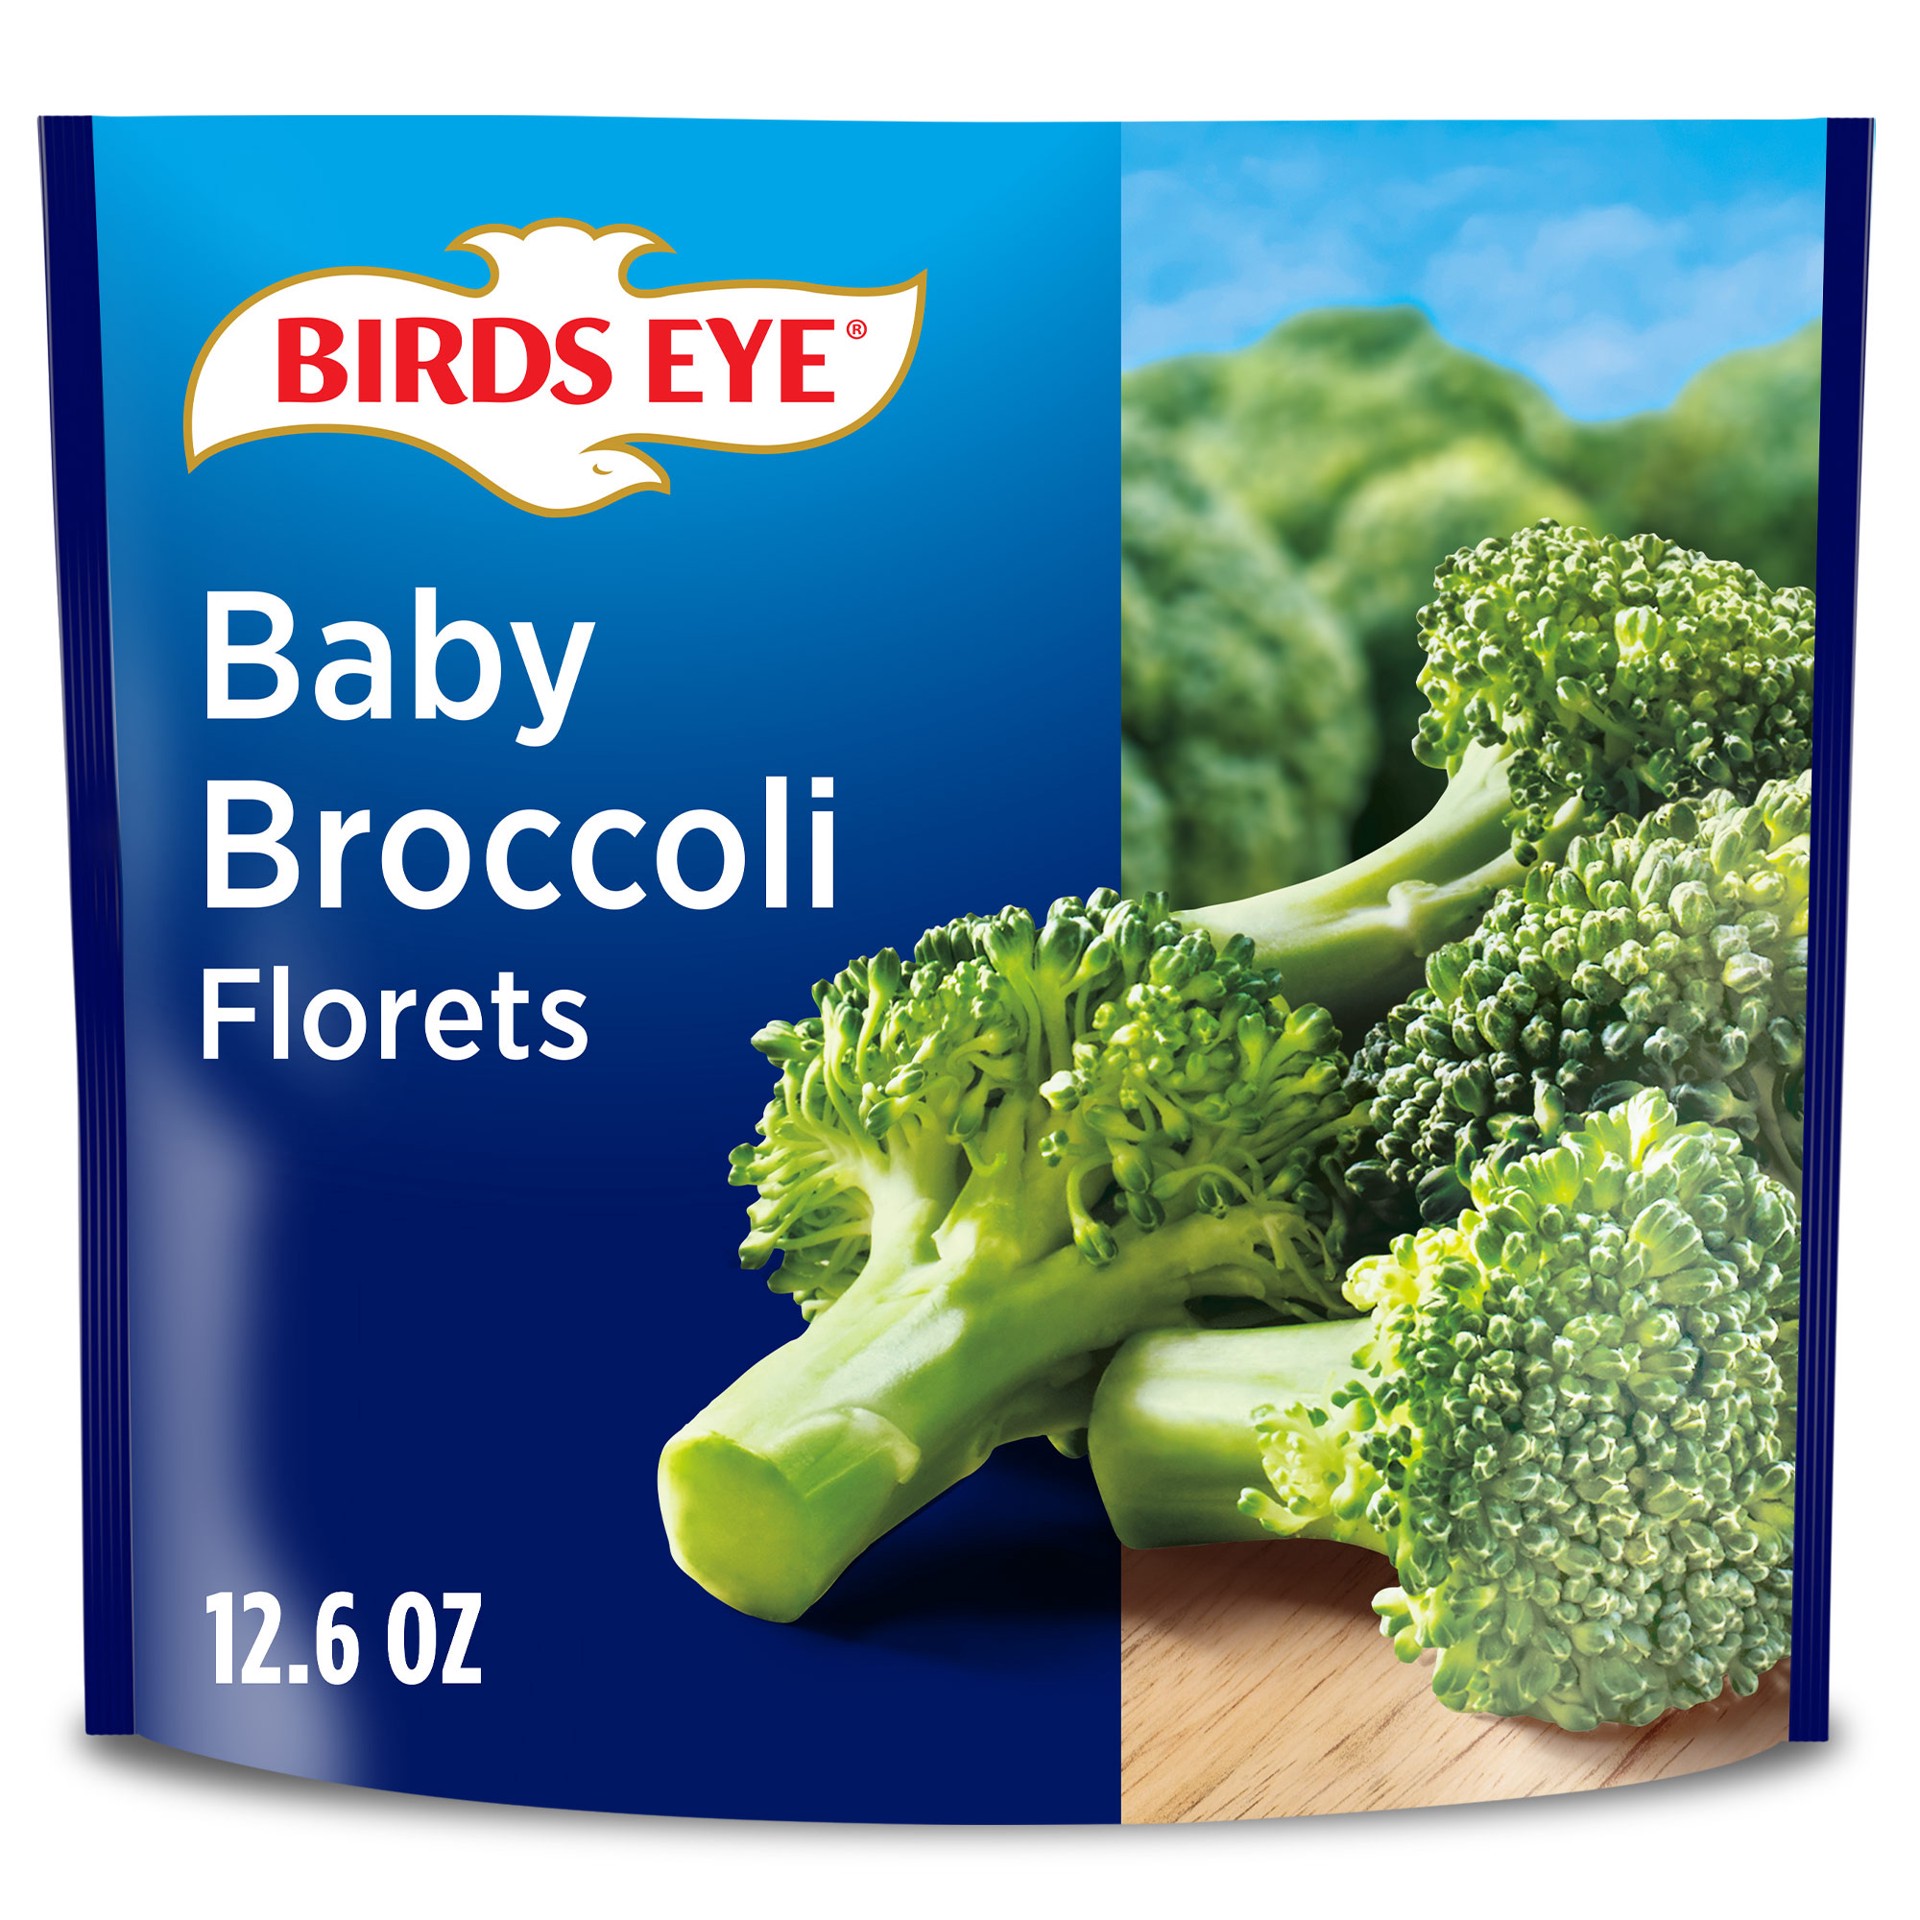 slide 1 of 17, Birds Eye Broccoli Florets Baby 12.6 oz, 12.6 oz